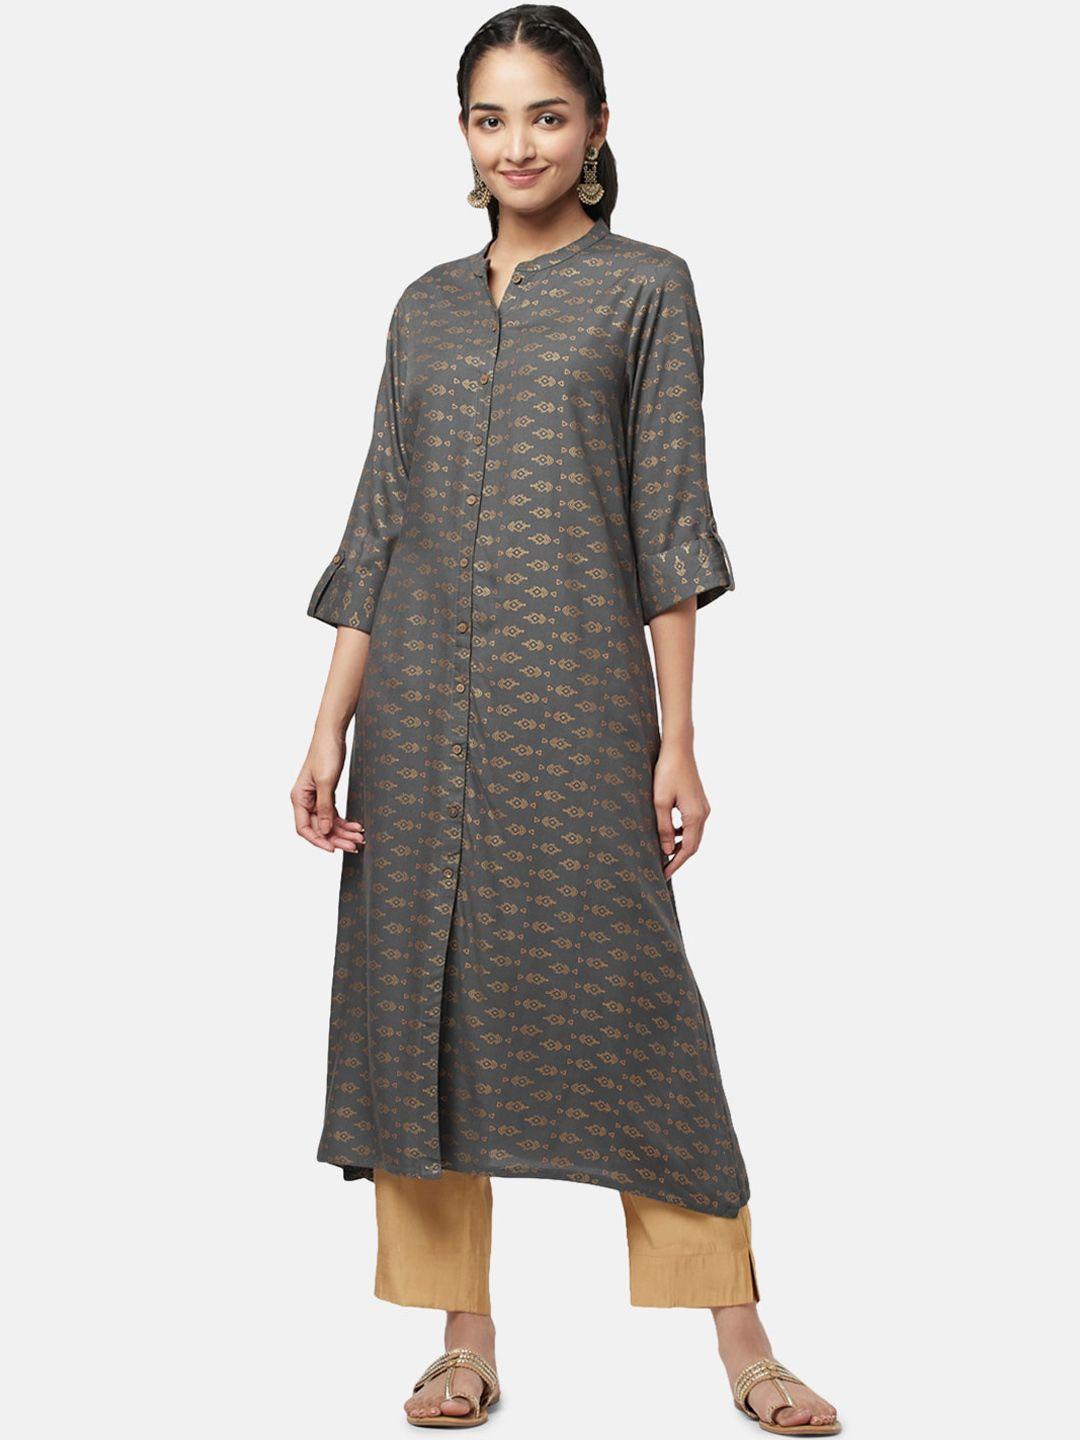 yu by pantaloons women ethnic motif printed roll-up sleeves a-line kurta